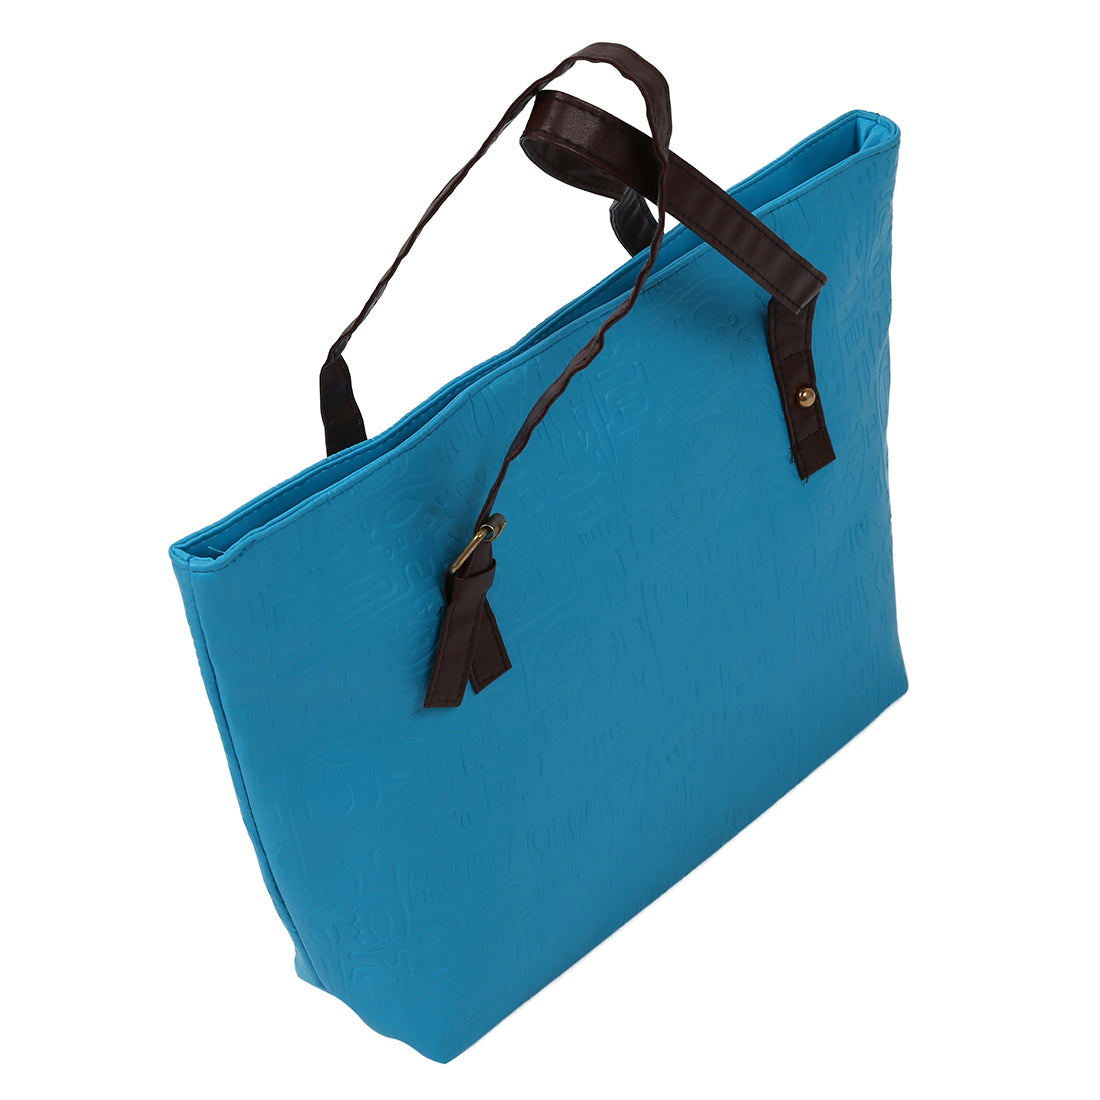 Fashion female bag, han edition fashion handbags, new oracle women bag, single shoulder bag - ebowsos